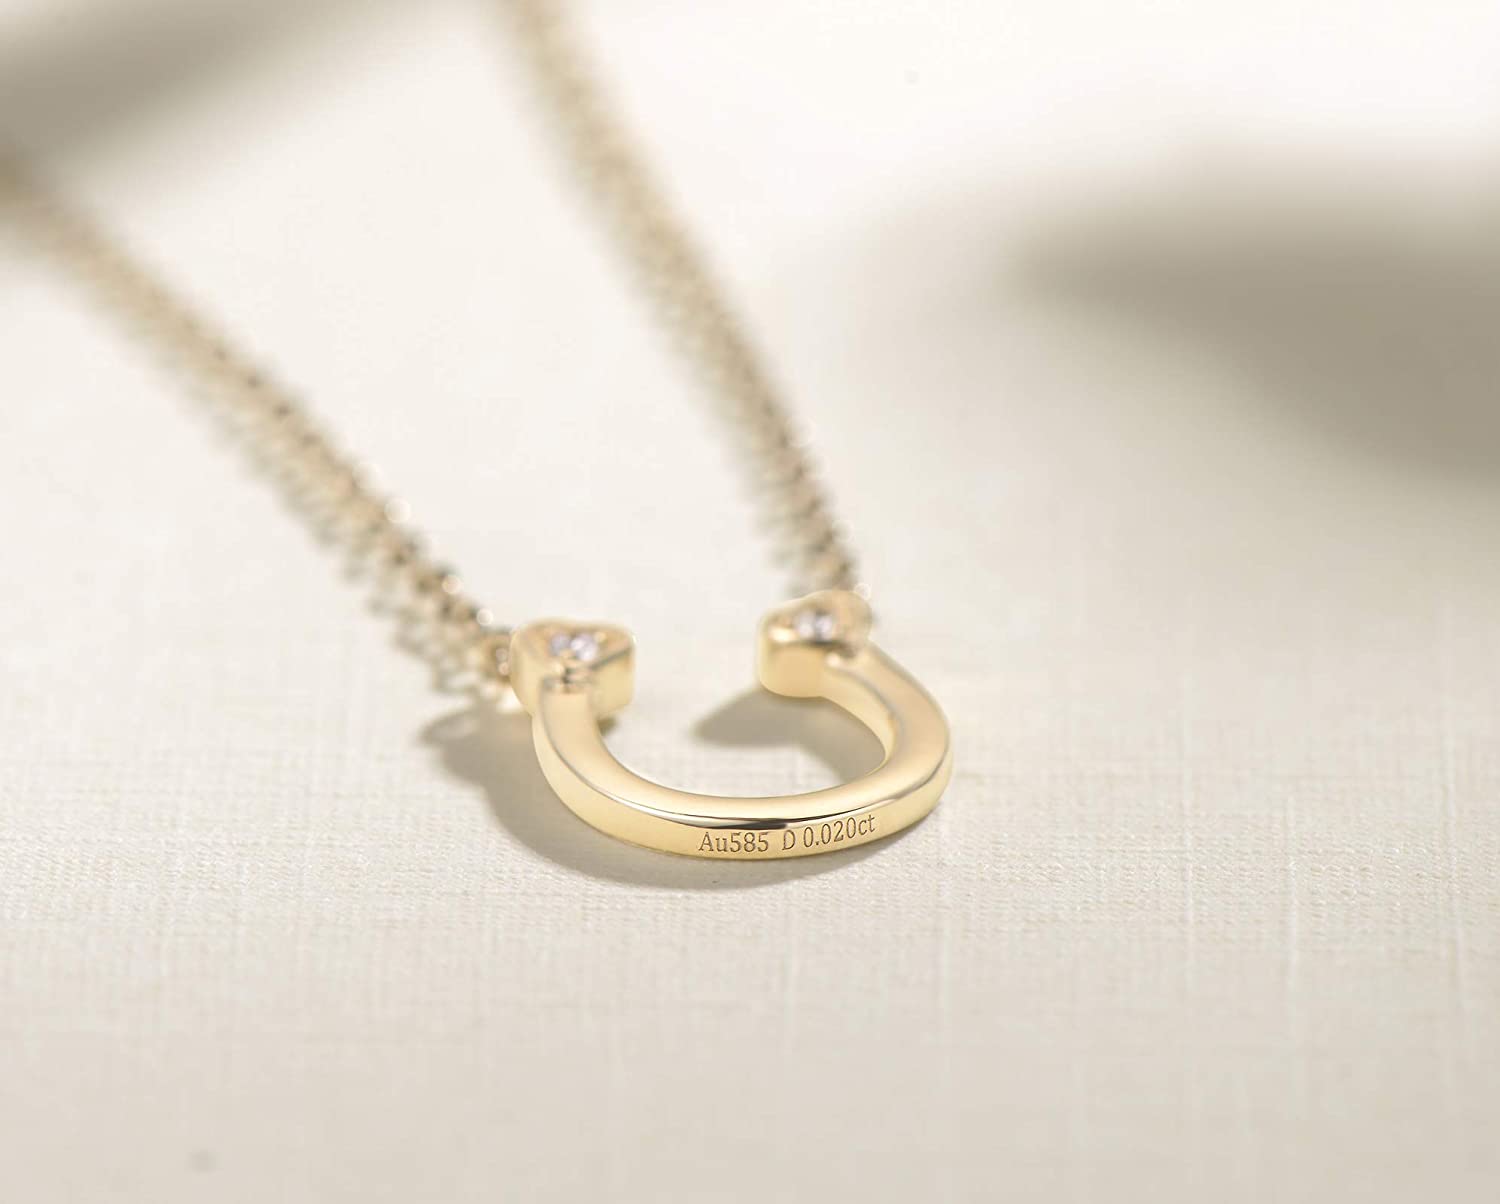 Diamond Horseshoe Heart Necklace in 14K Yellow Gold 